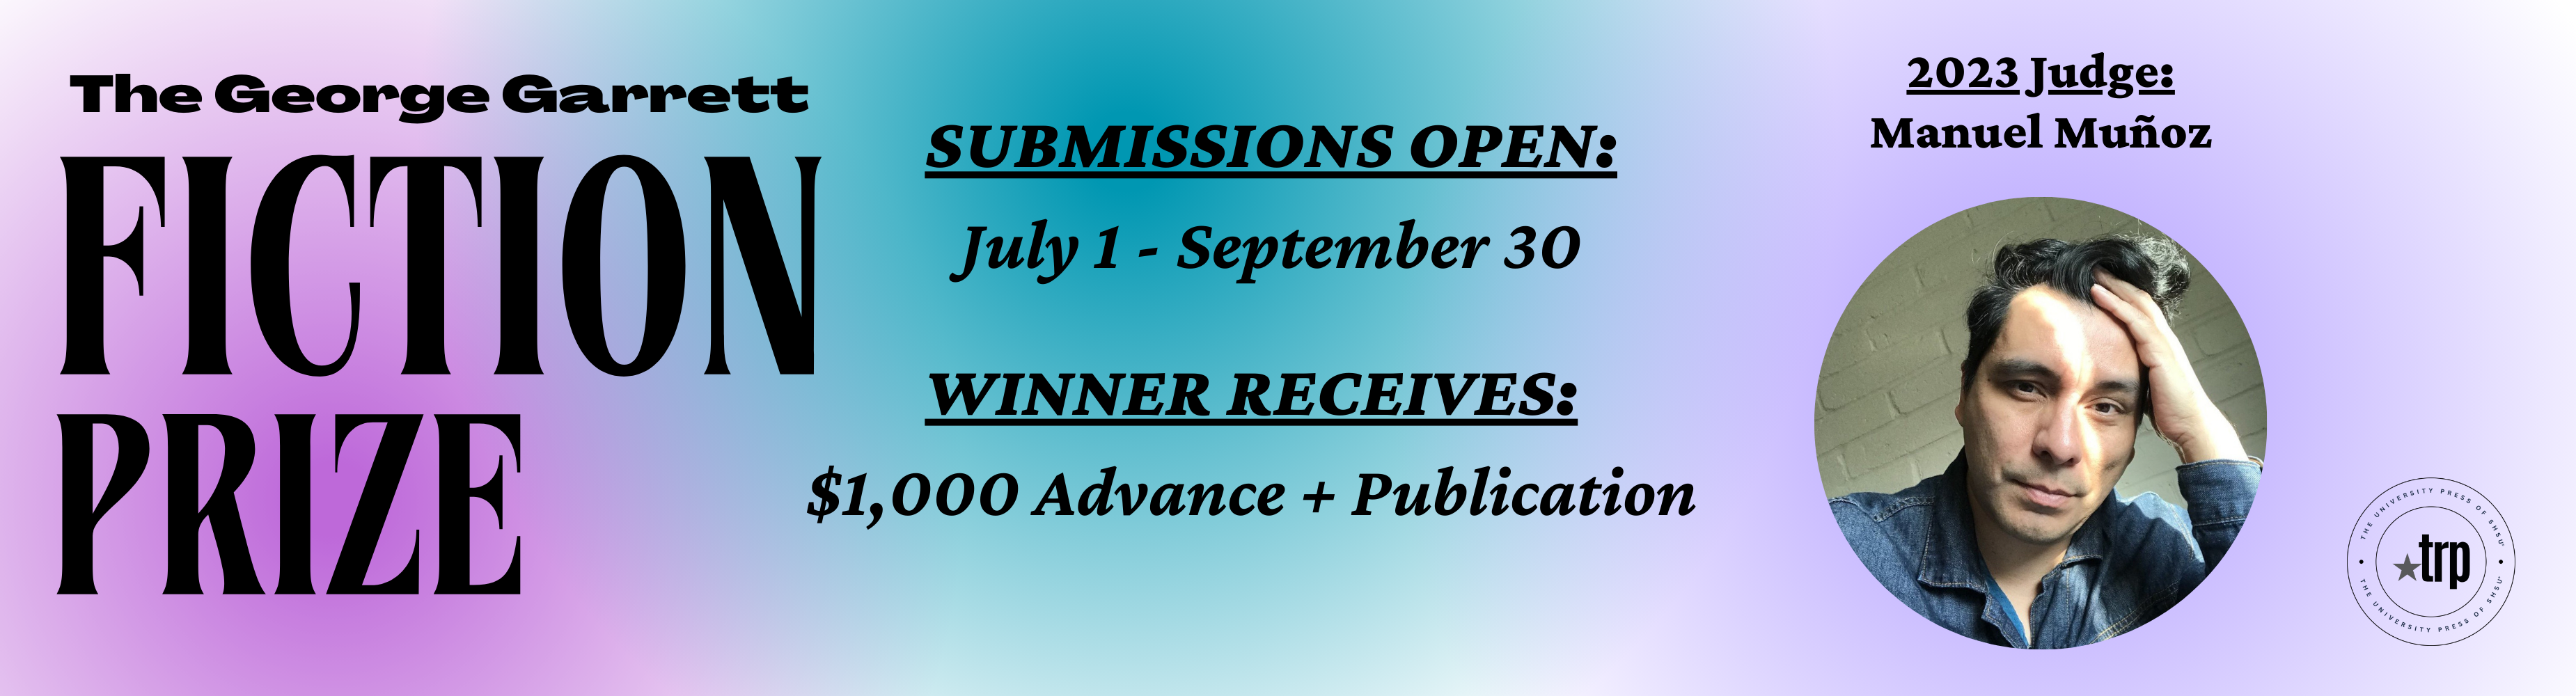 The George Garrett Fiction Prize. 2023 Judge: Manuel Muñoz. Submissions open July 1 - September 30. $1,000 advance + publication.